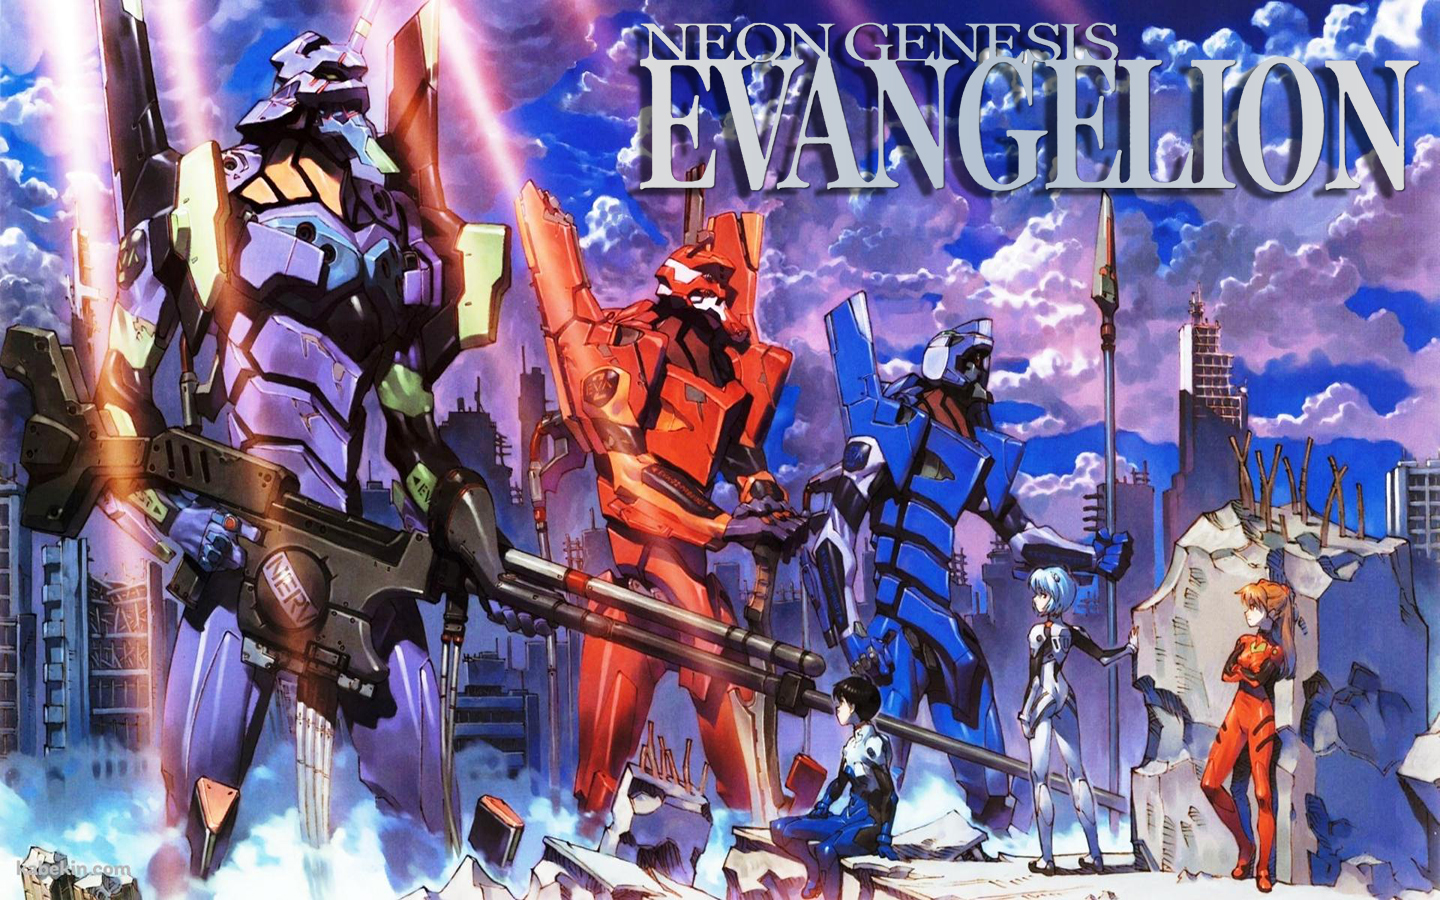 Neon Genesis Evangelion Live Action Fancast